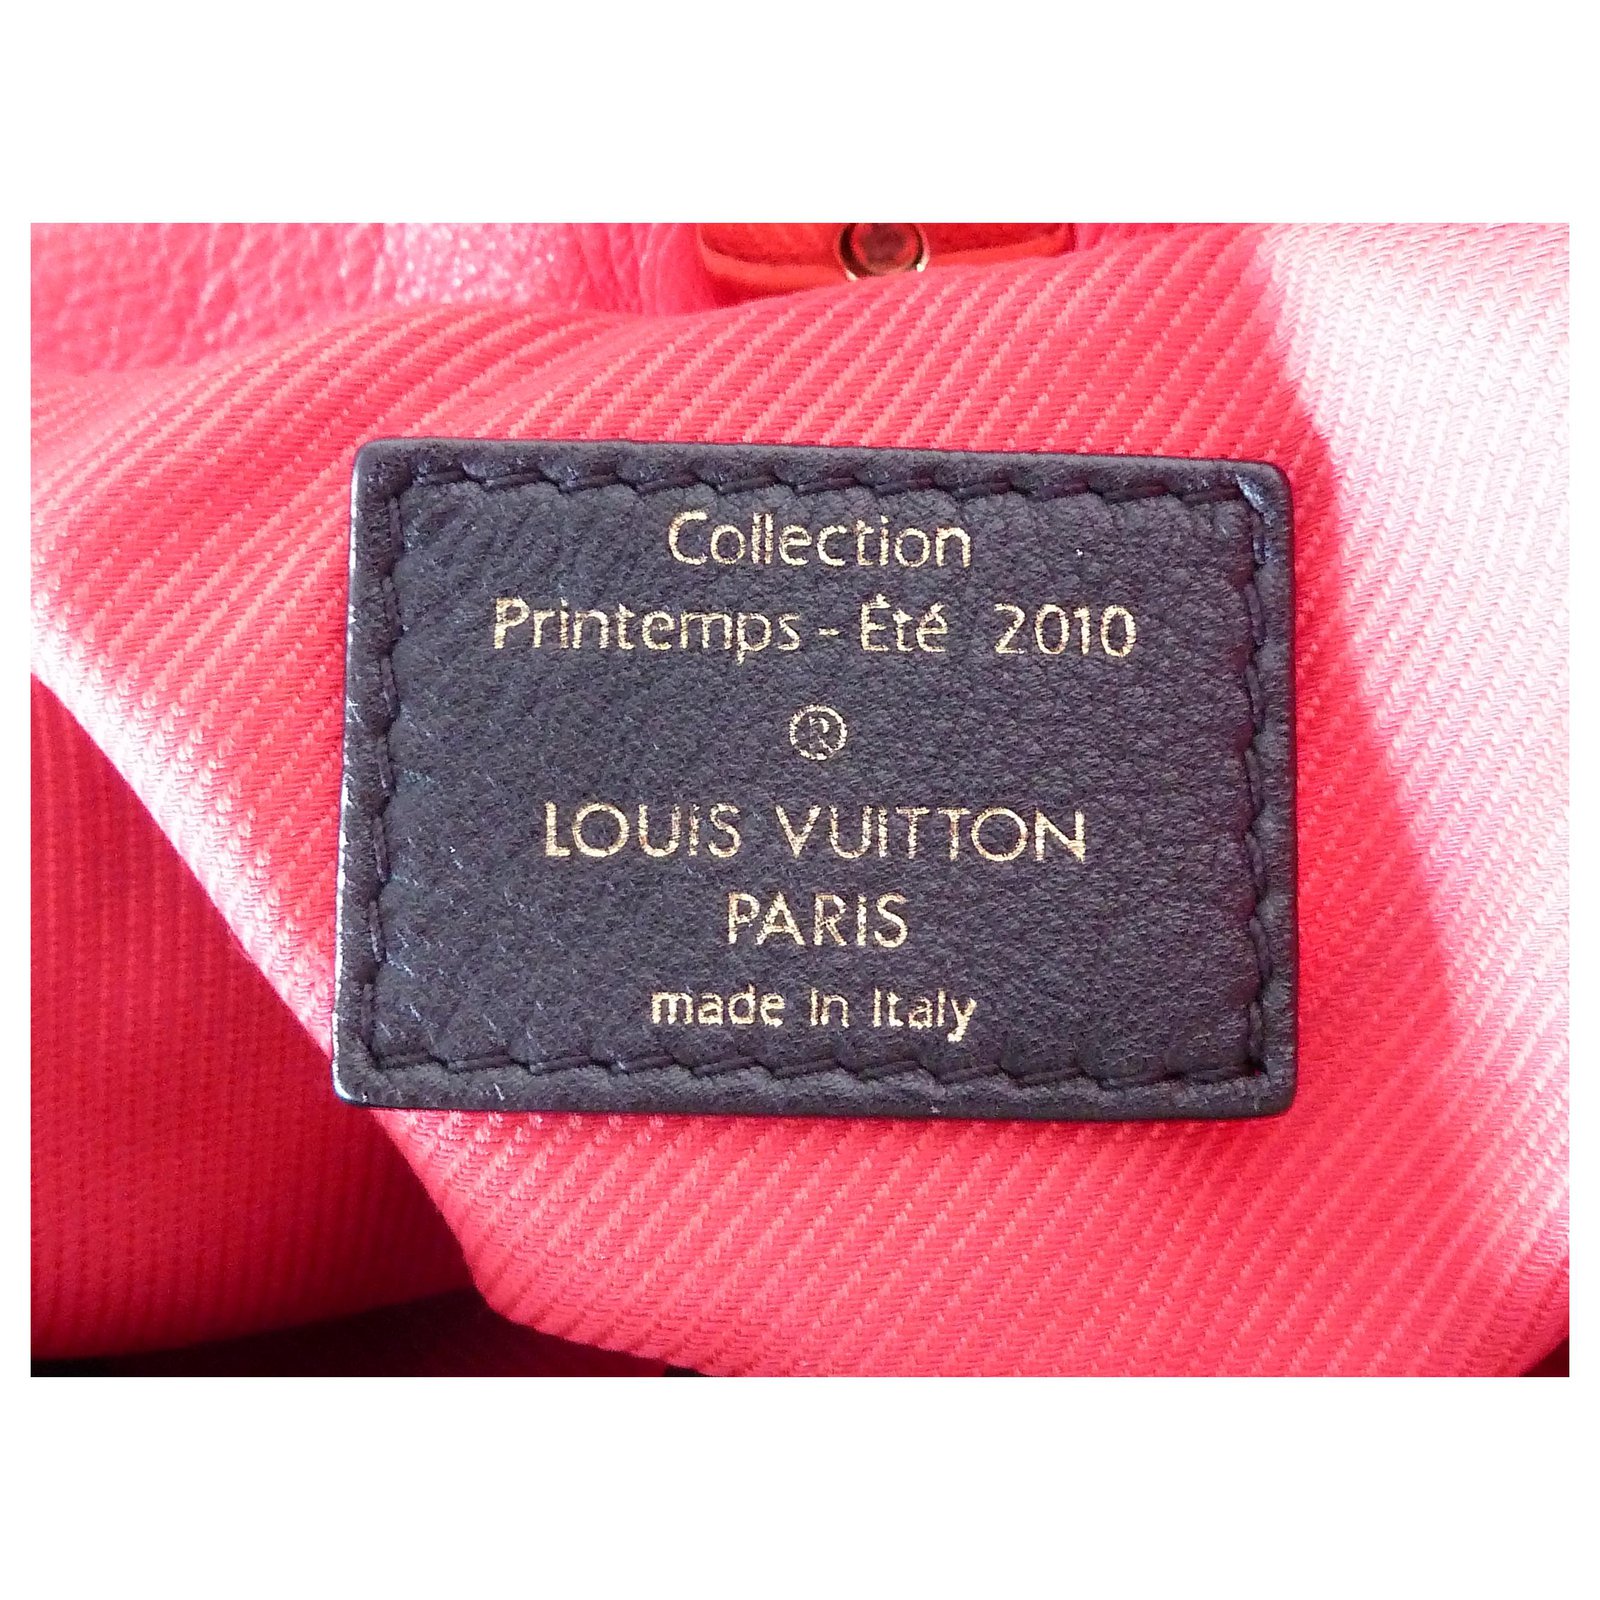 LOUIS VUITTON Cheche Bohemian limited edition bag Multiple colors